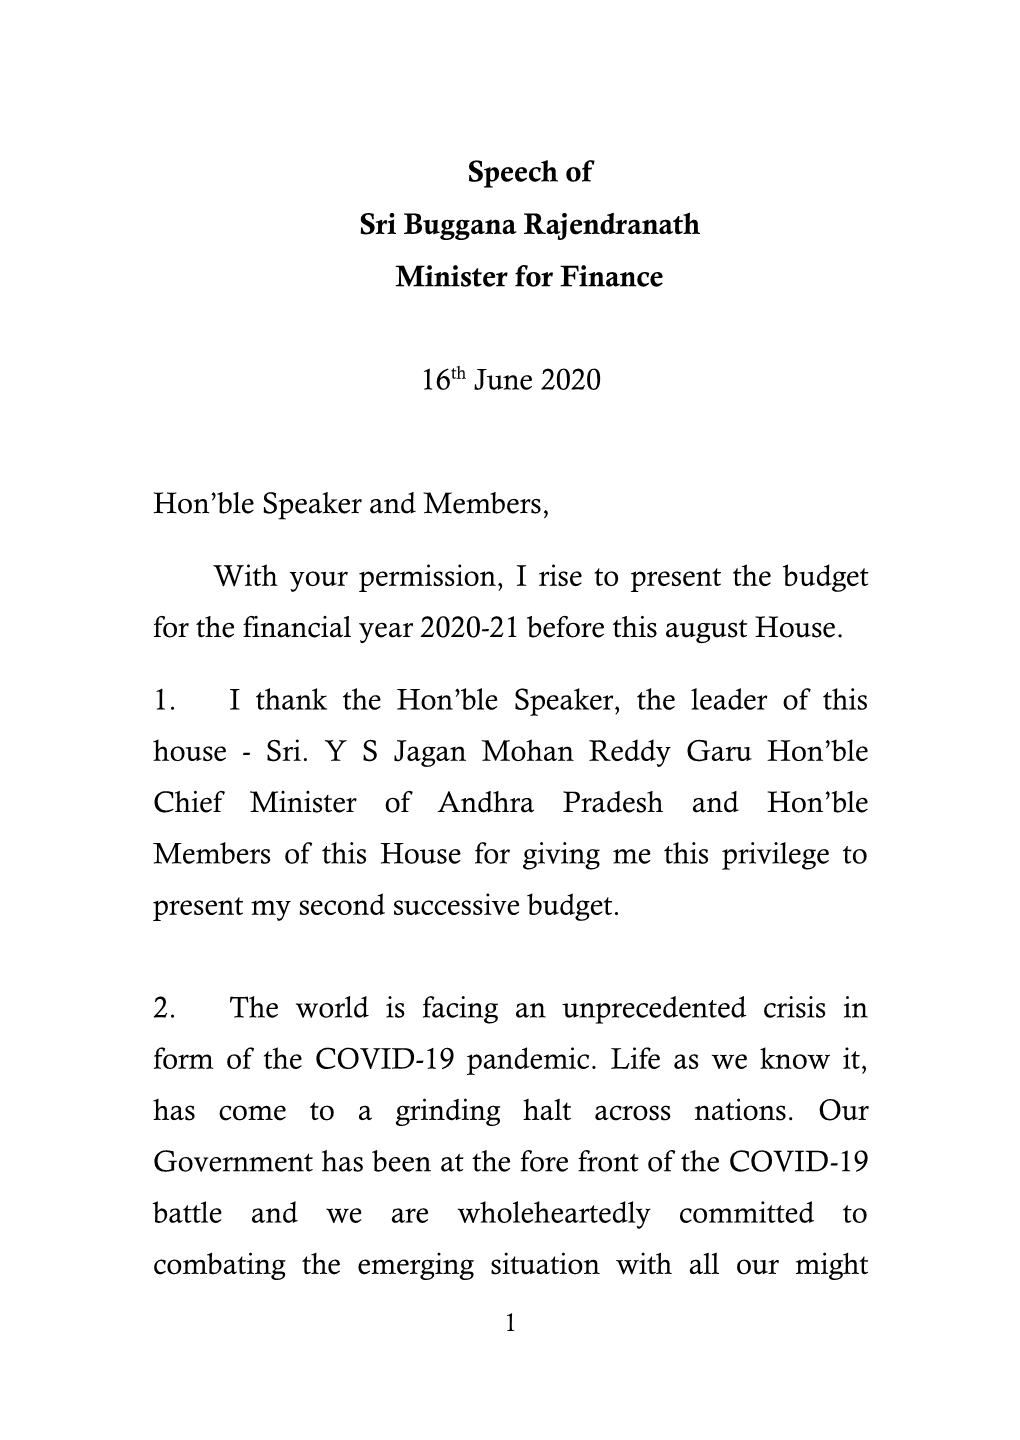 Speech of Sri Buggana Rajendranath Minister for Finance 16Th June